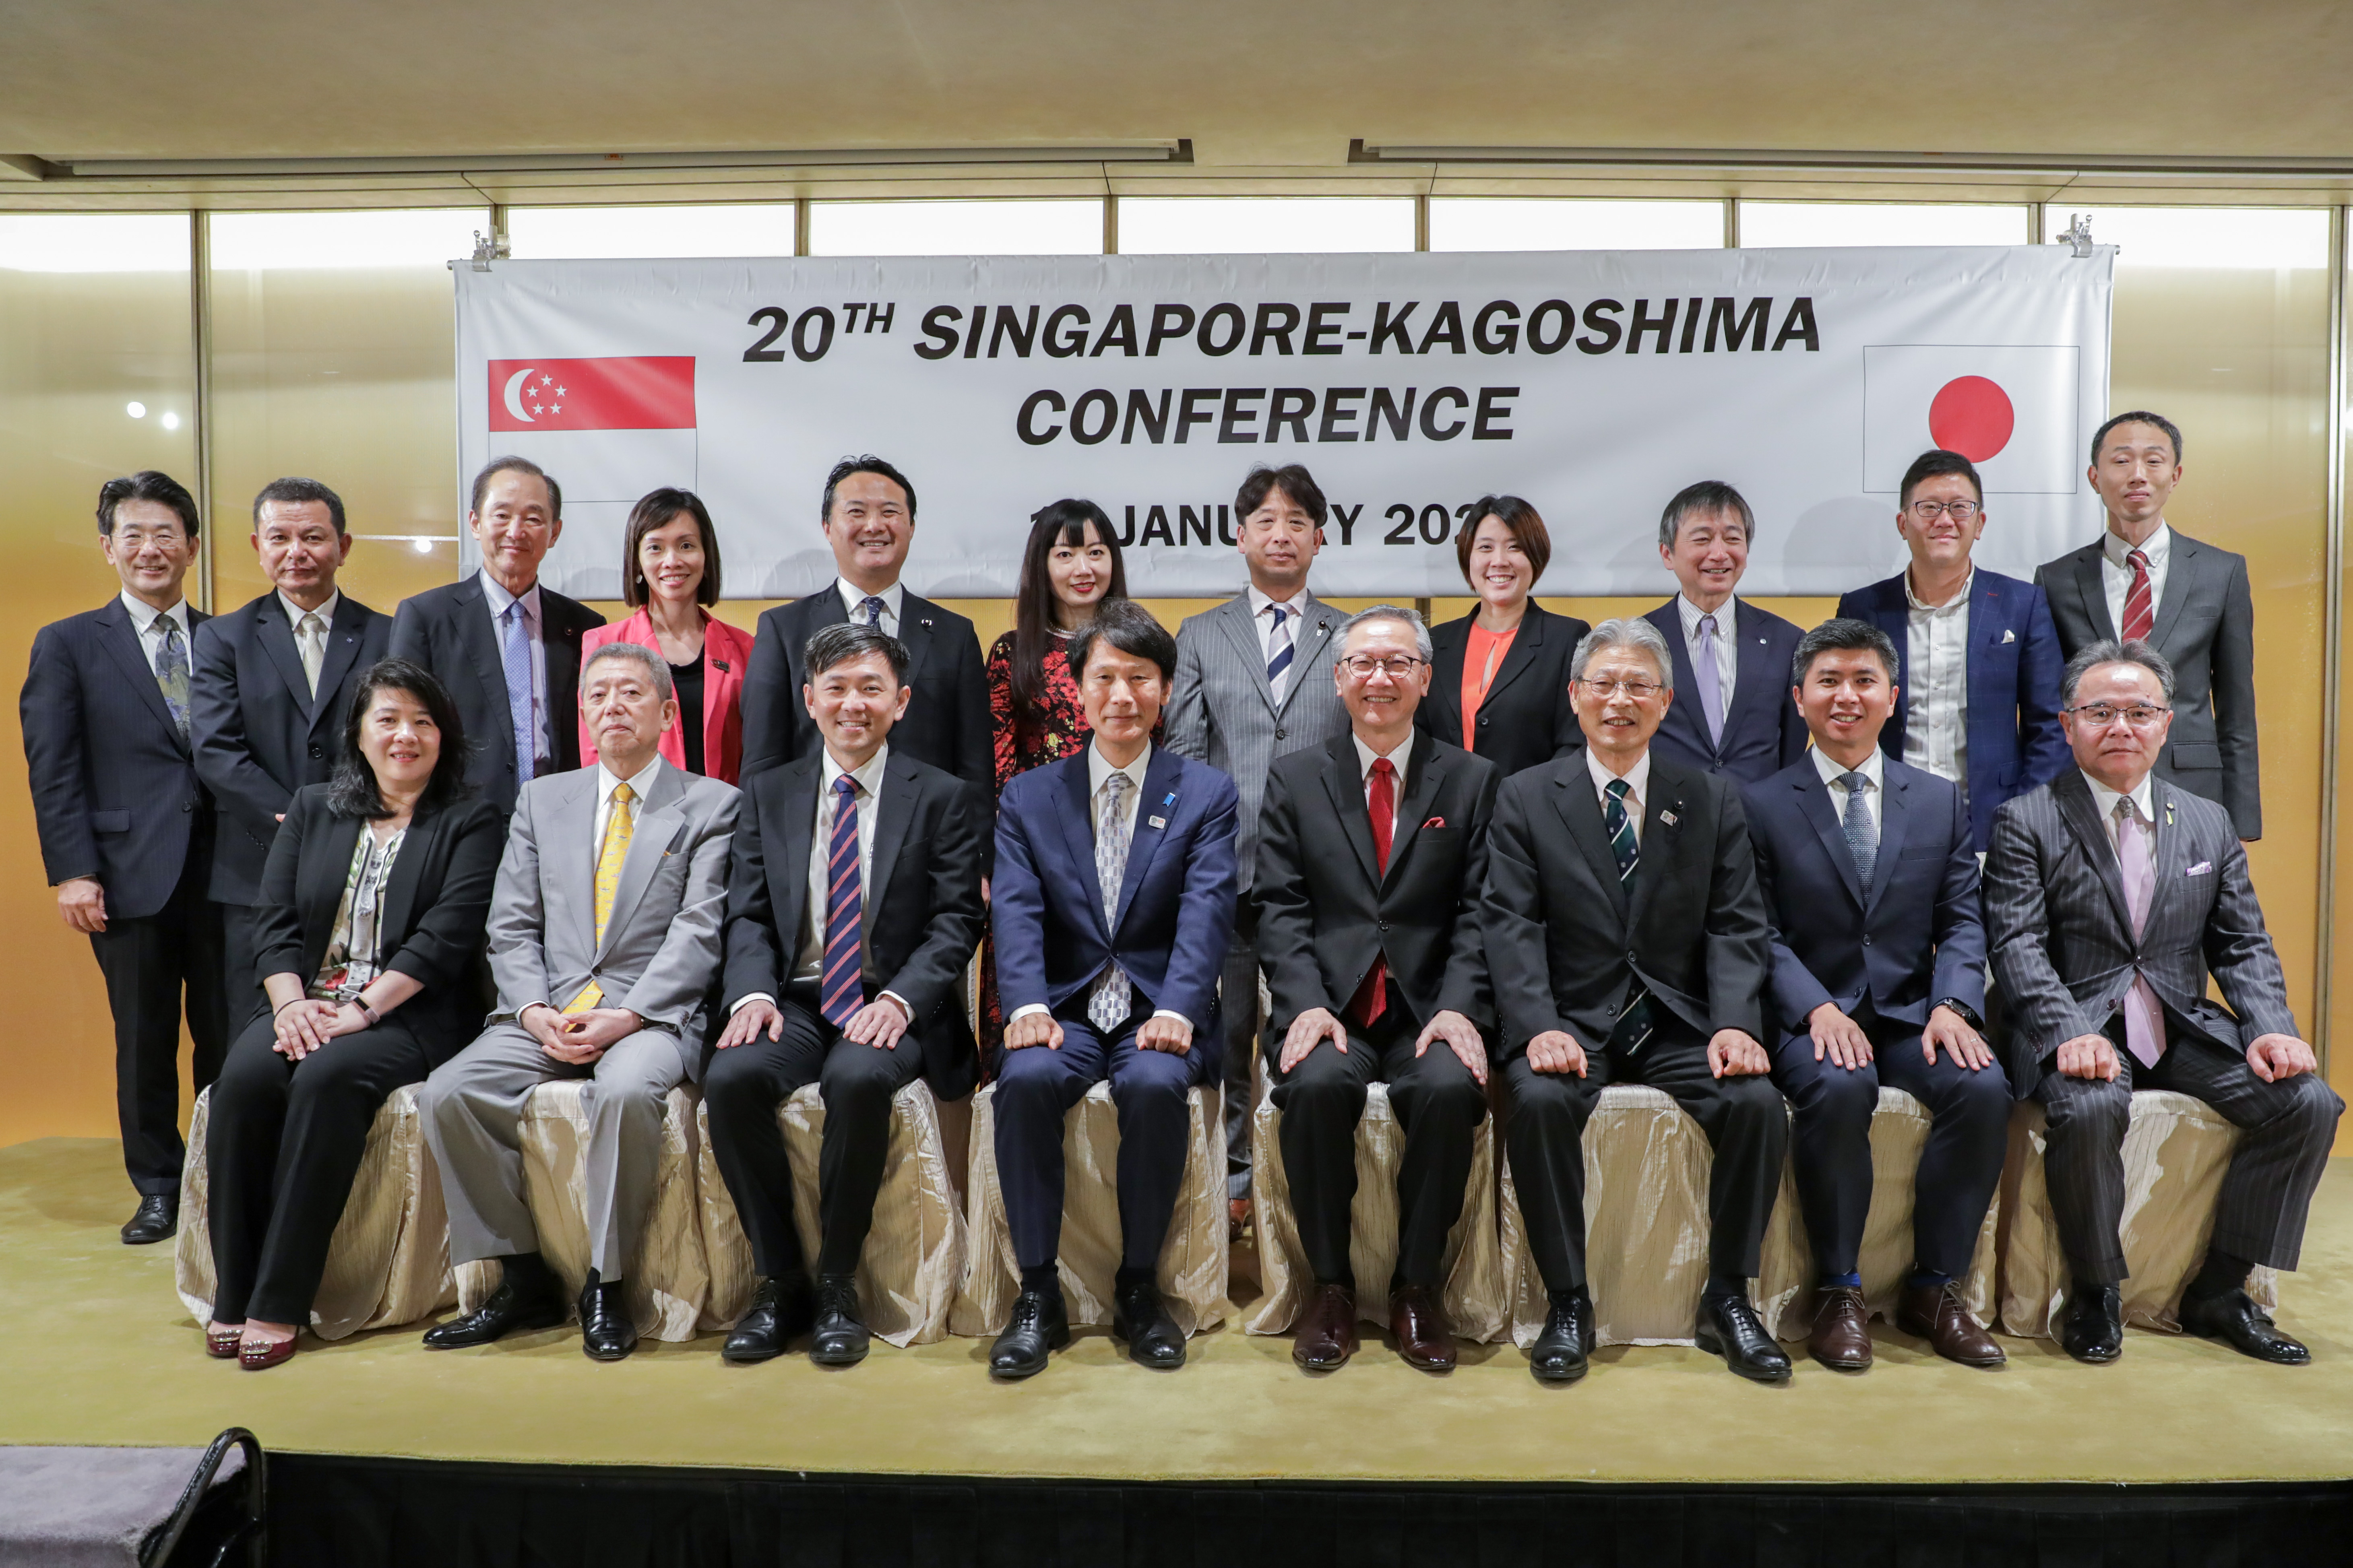 20th Singapore-Kagoshima Conference